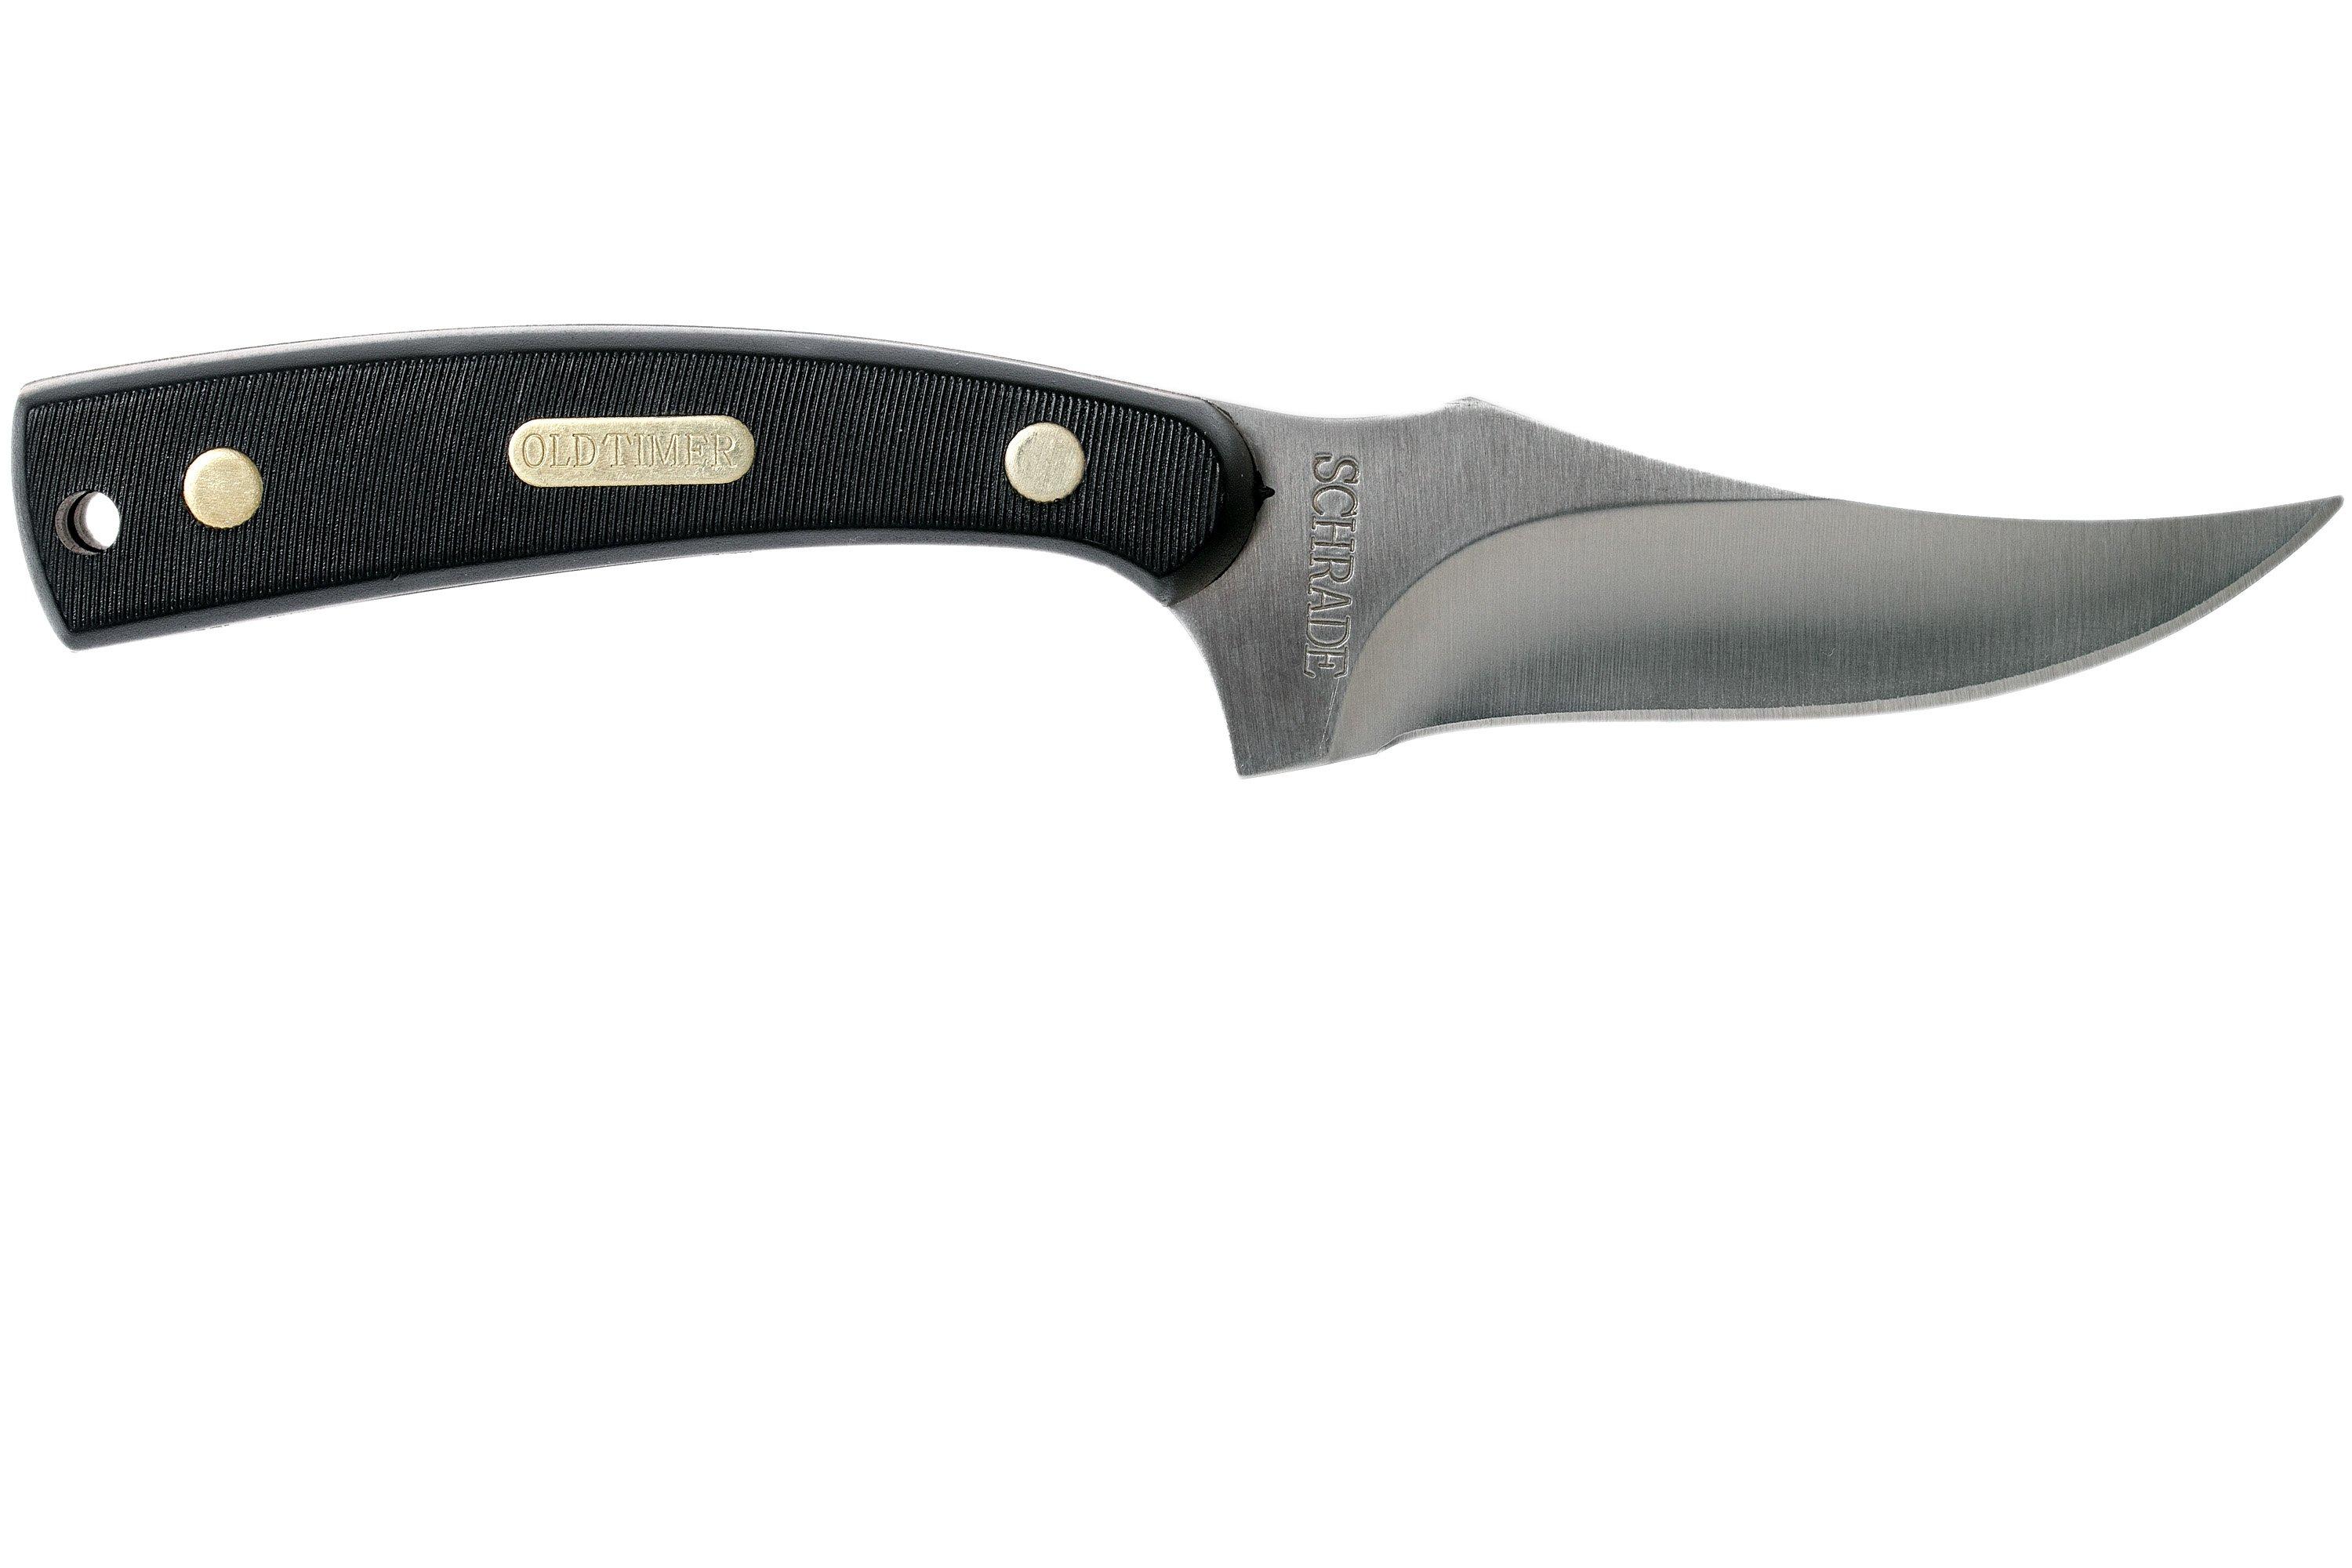 Old Timer Sharpfinger 152OT hunting knife | Advantageously shopping at ...